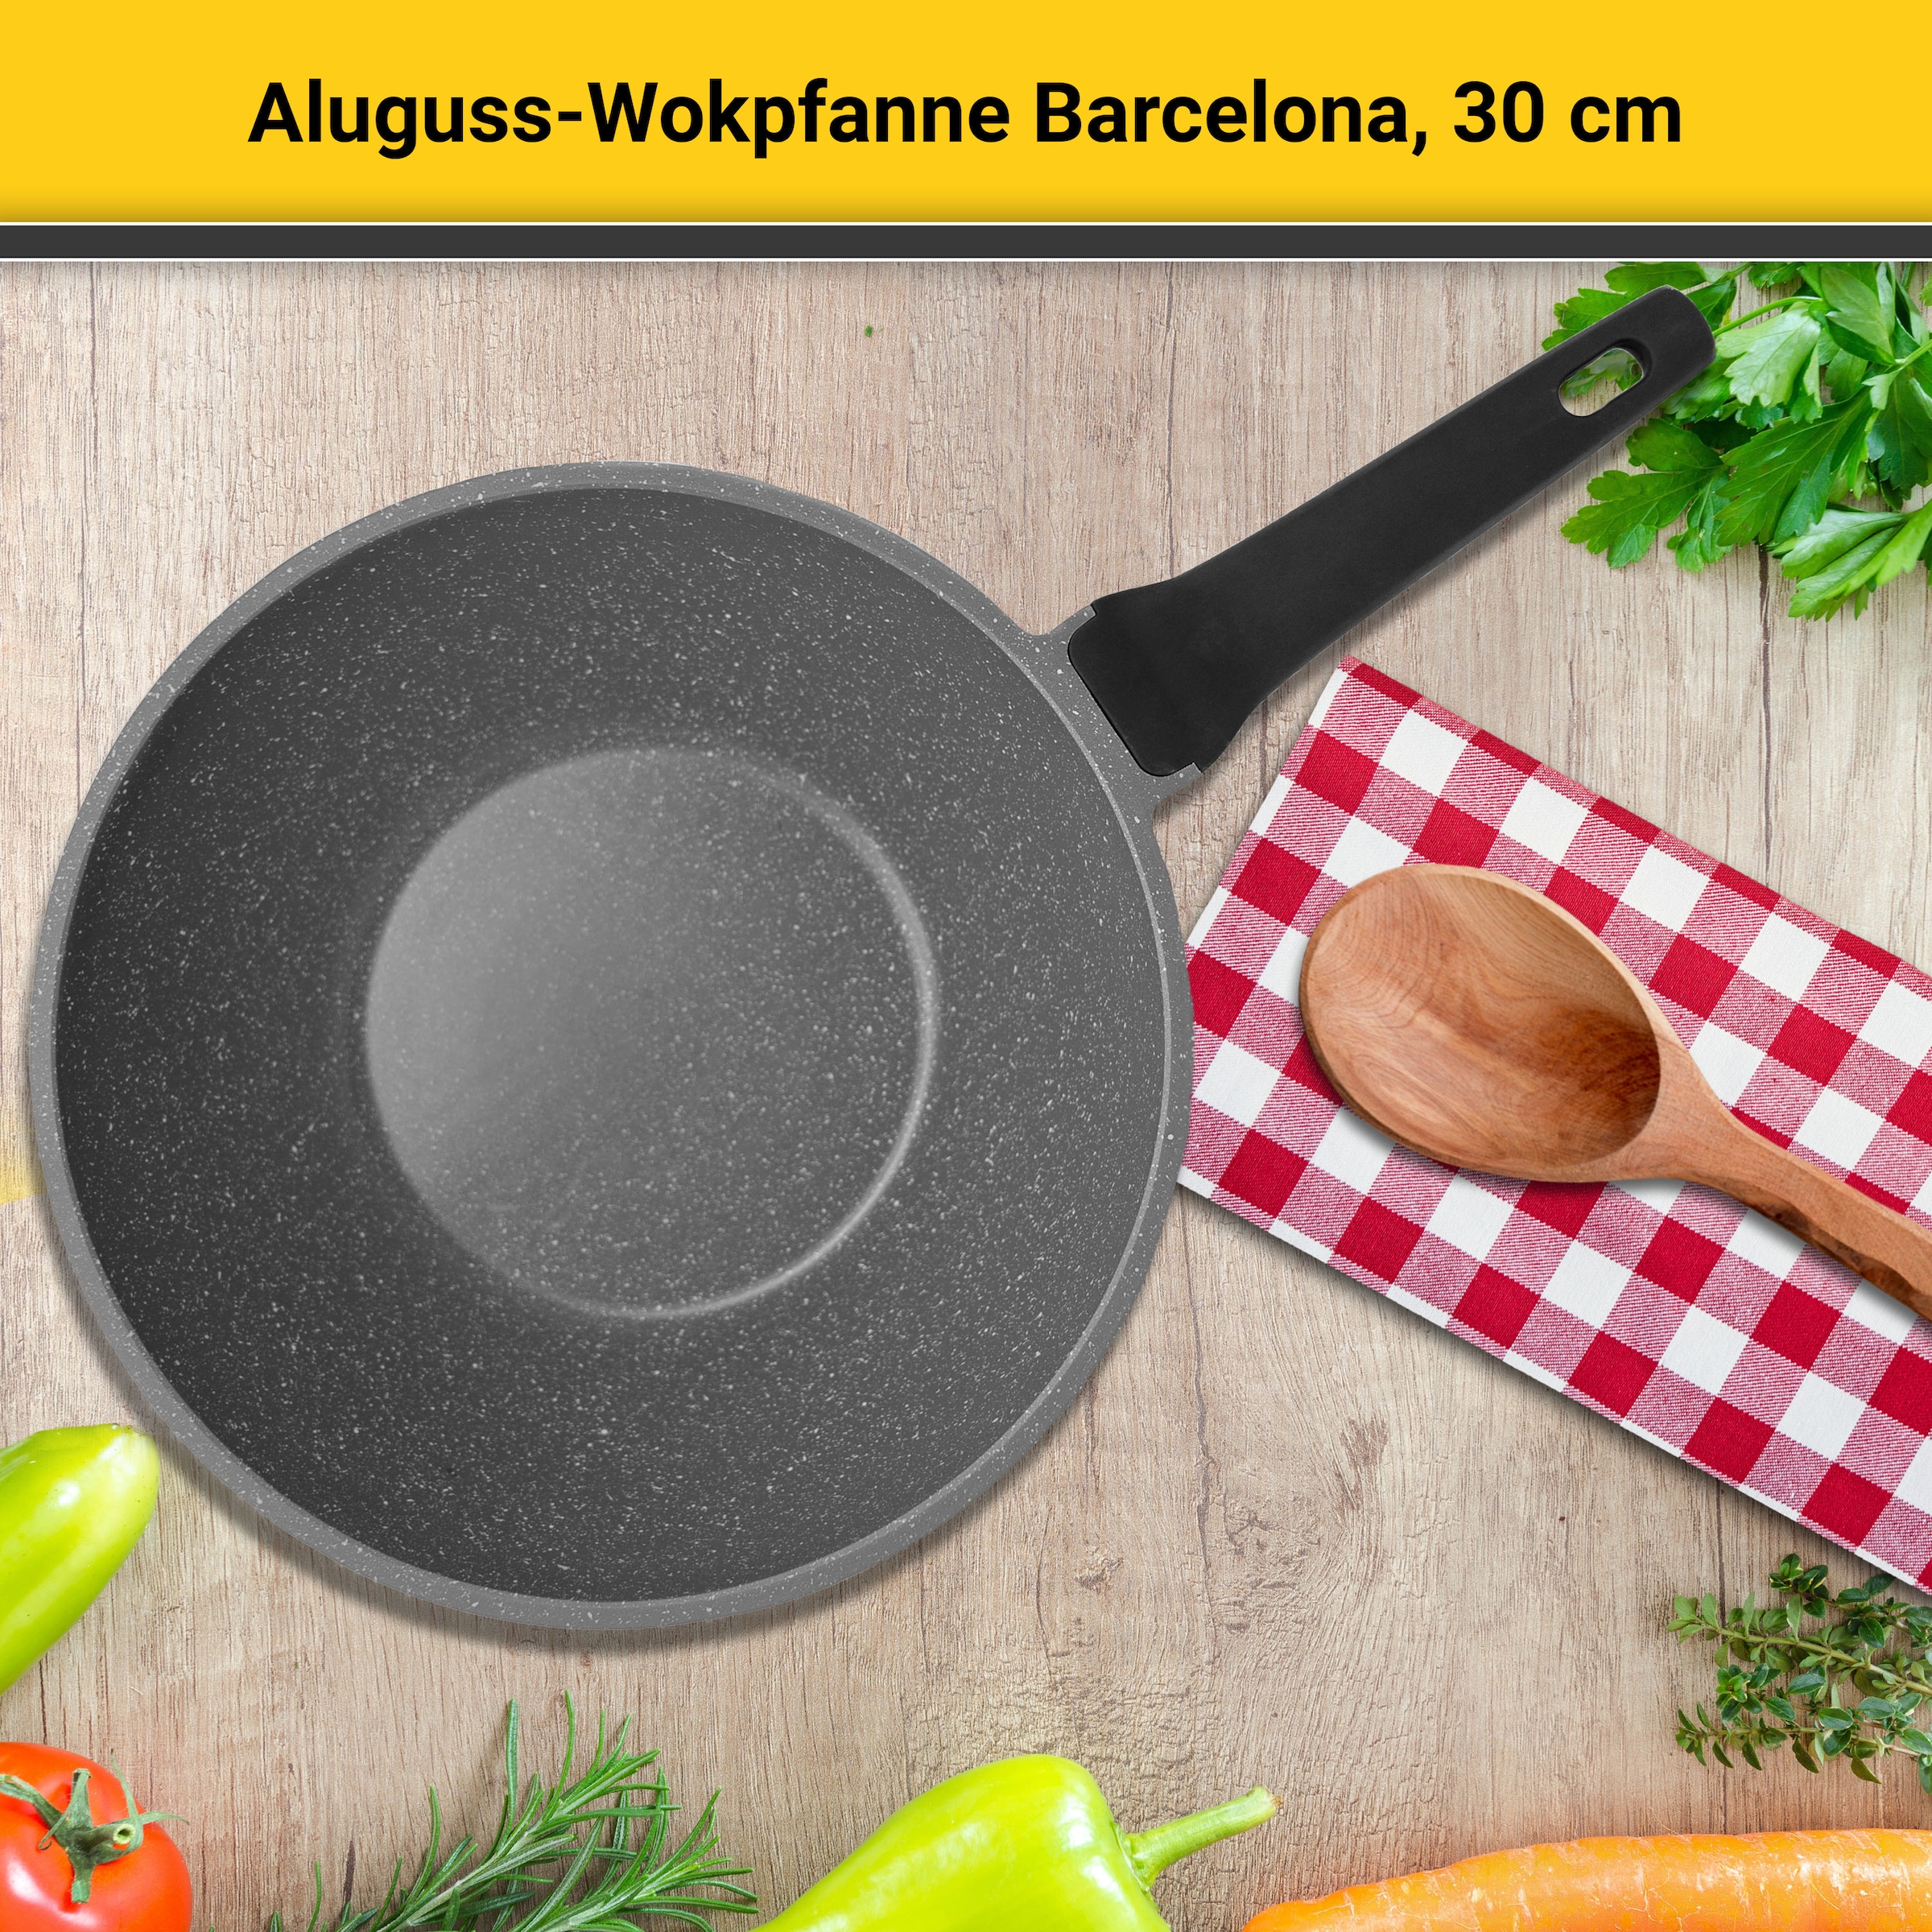 Krüger Wok »Aluguss Wokpfanne Barcelona, 30 cm«, Aluminiumguss, (1 tlg.), für Induktions-Kochfelder geeignet